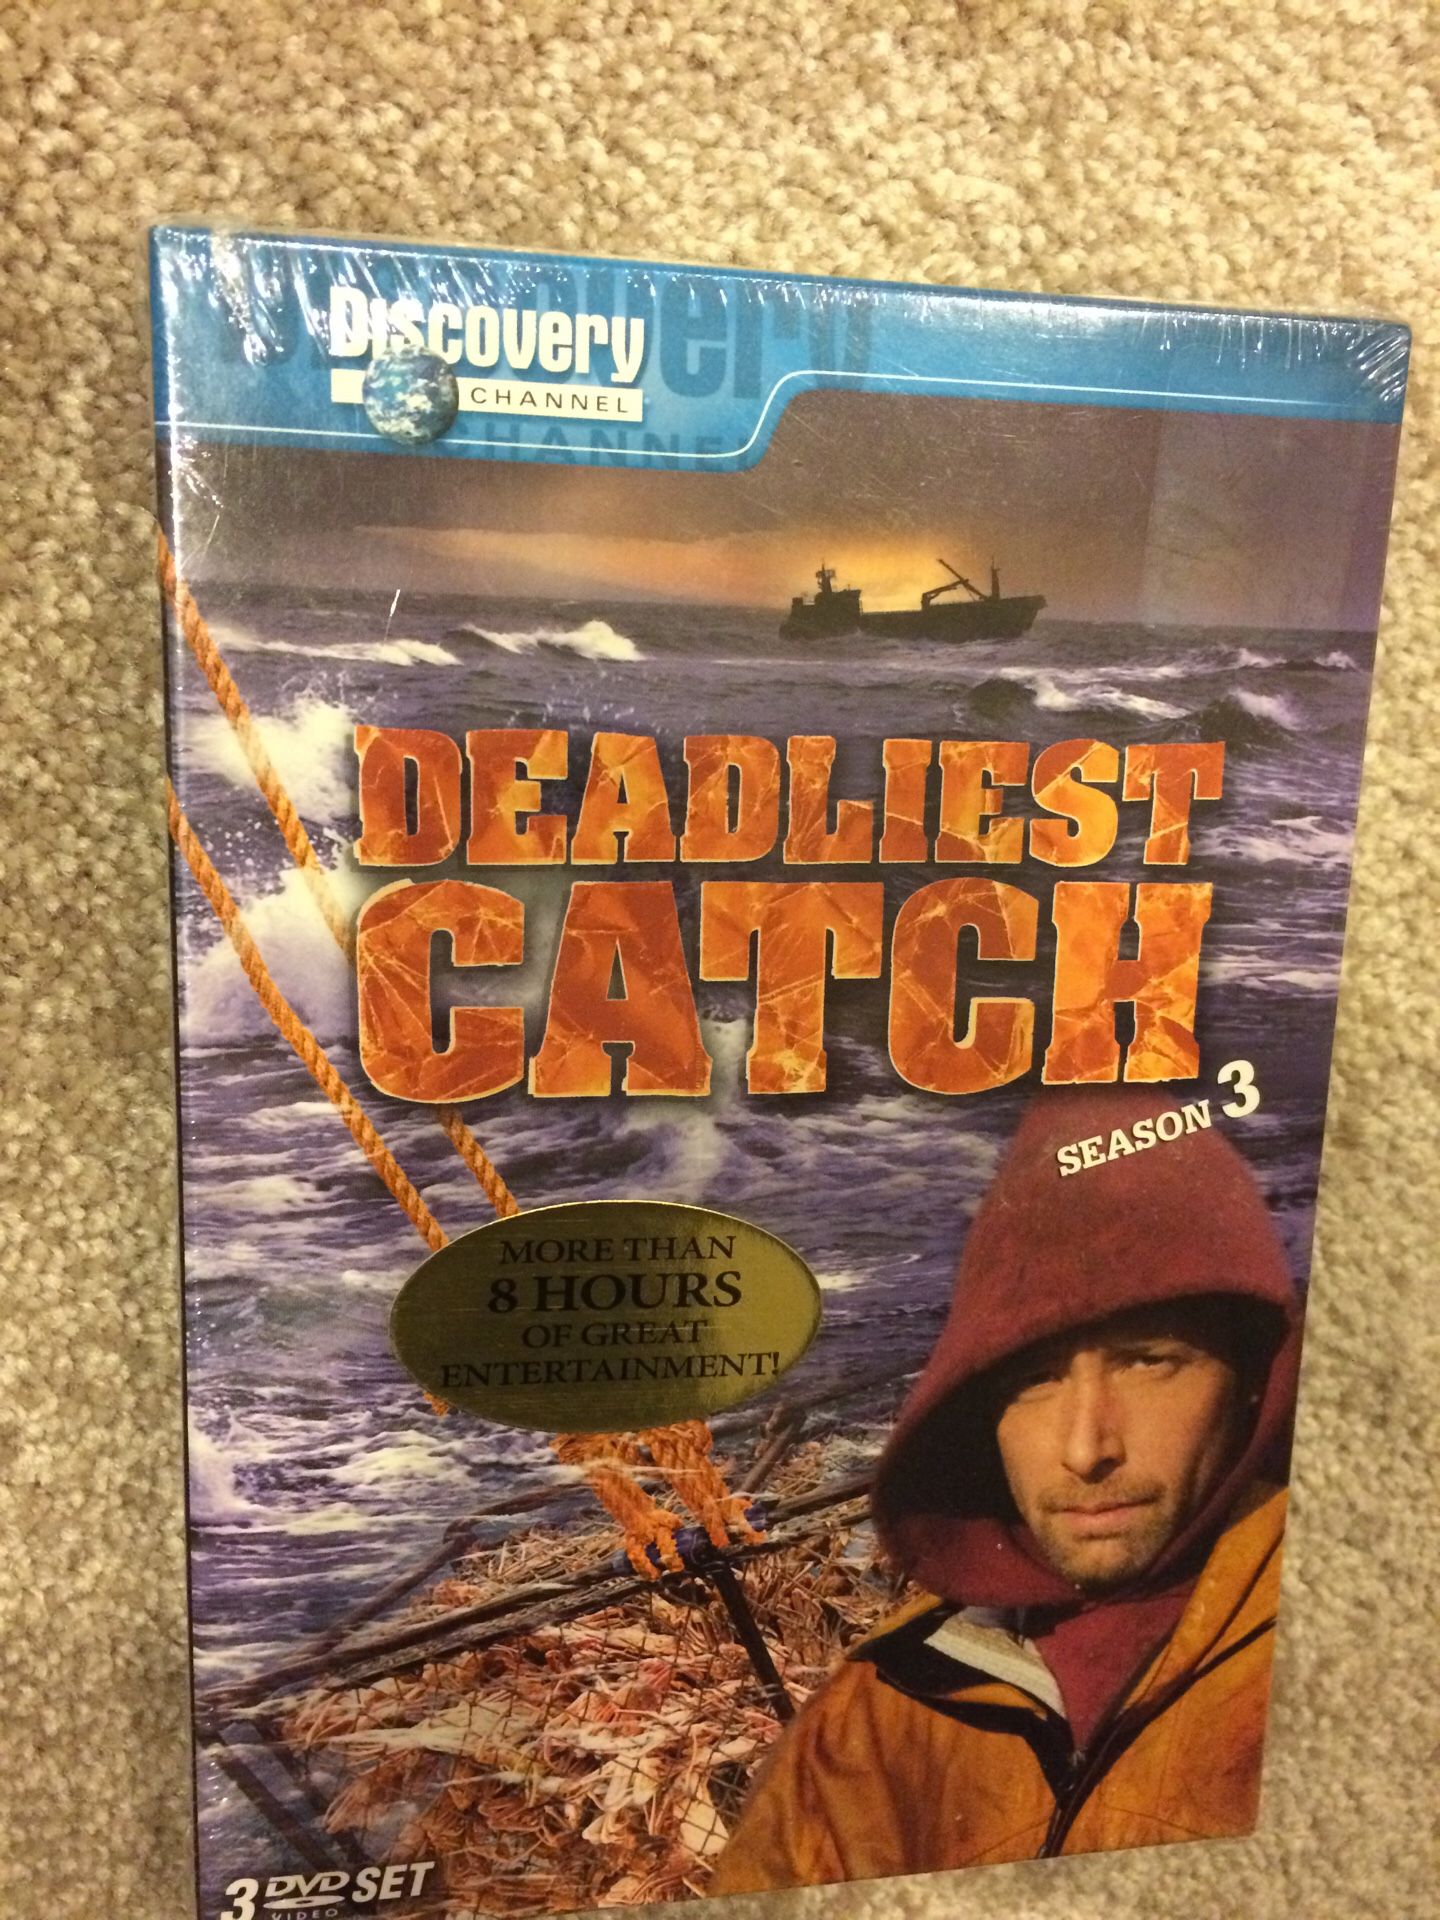 Deadliest Catch DVDs (season 3)